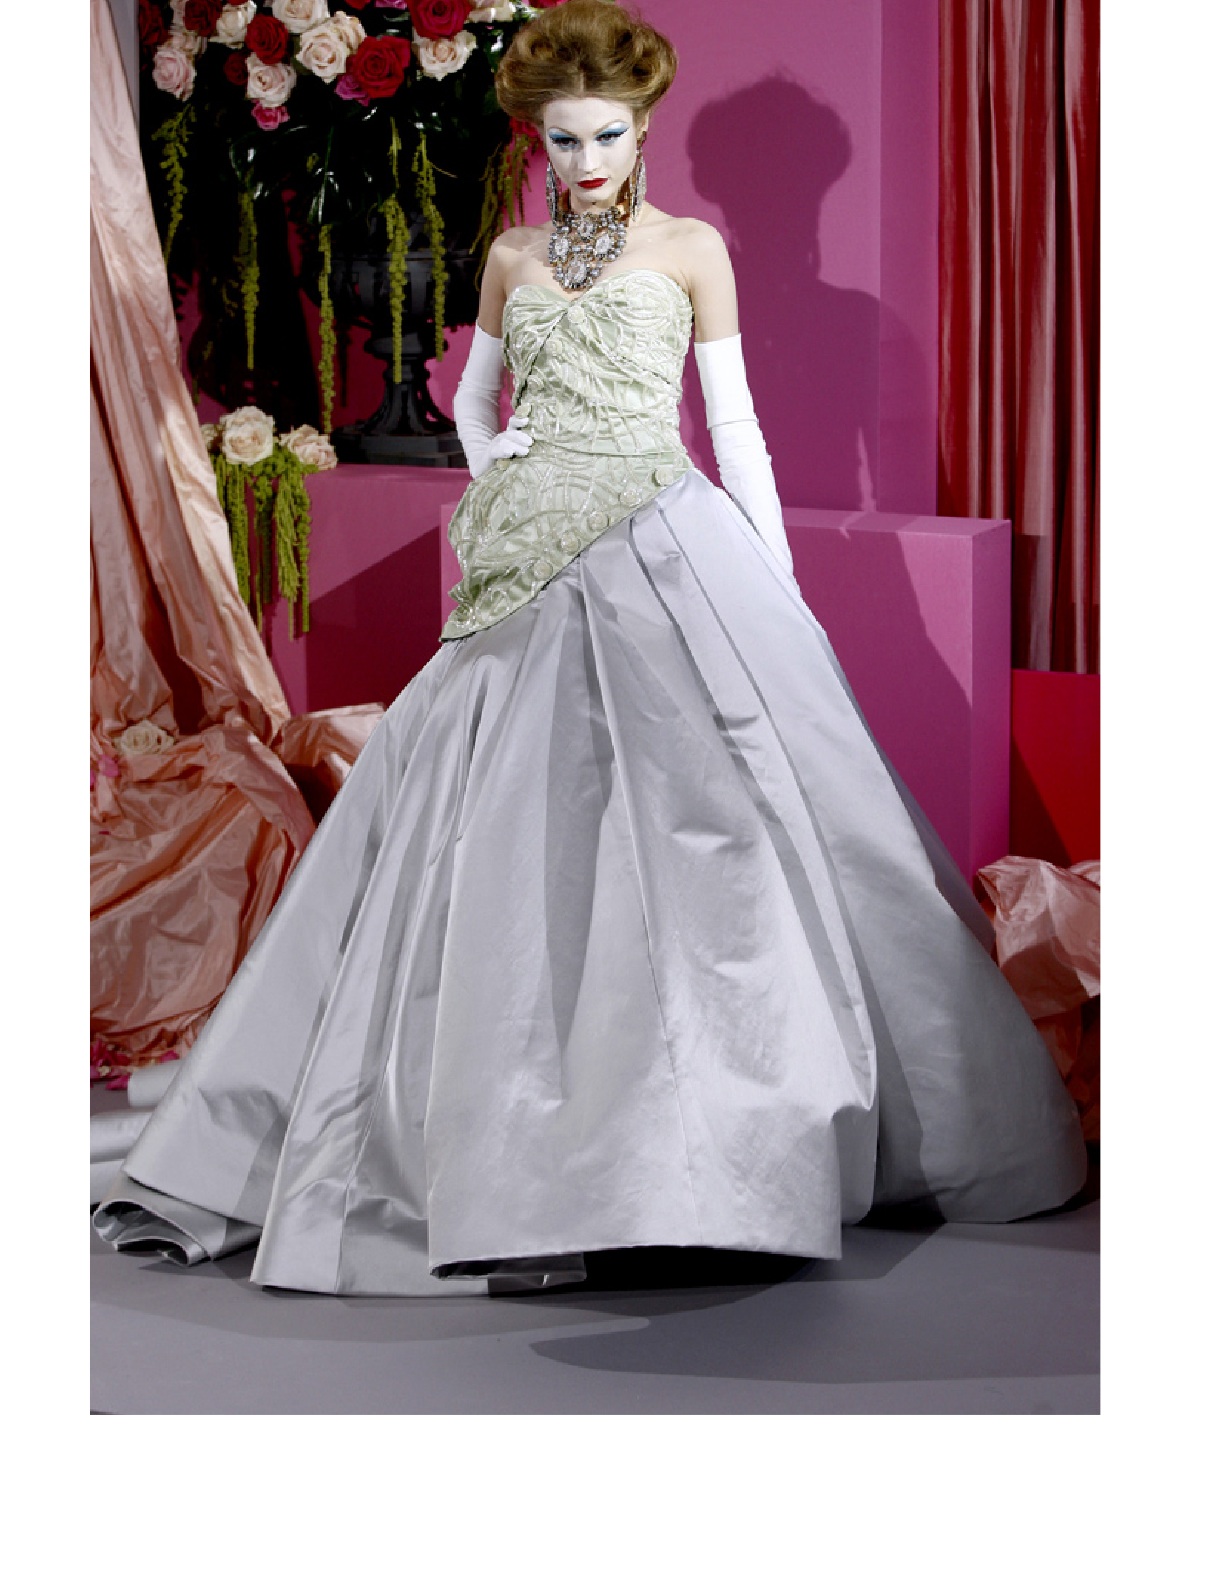 https://blogger.googleusercontent.com/img/b/R29vZ2xl/AVvXsEij_WSc1gNpfZJI8FAZBMJRA4bqTVpz8p2SSwor05E8l7nqxW9nUazNITEikdoqHO5l4zT1v4zwwUsi0b0i5YSBQx2rVaDMLtzCADEJED8tpfXuhxq4pk0cx1io11PxoFuHHF7yBKTJ81M/s1600/Bride+Dior+2010.jpg